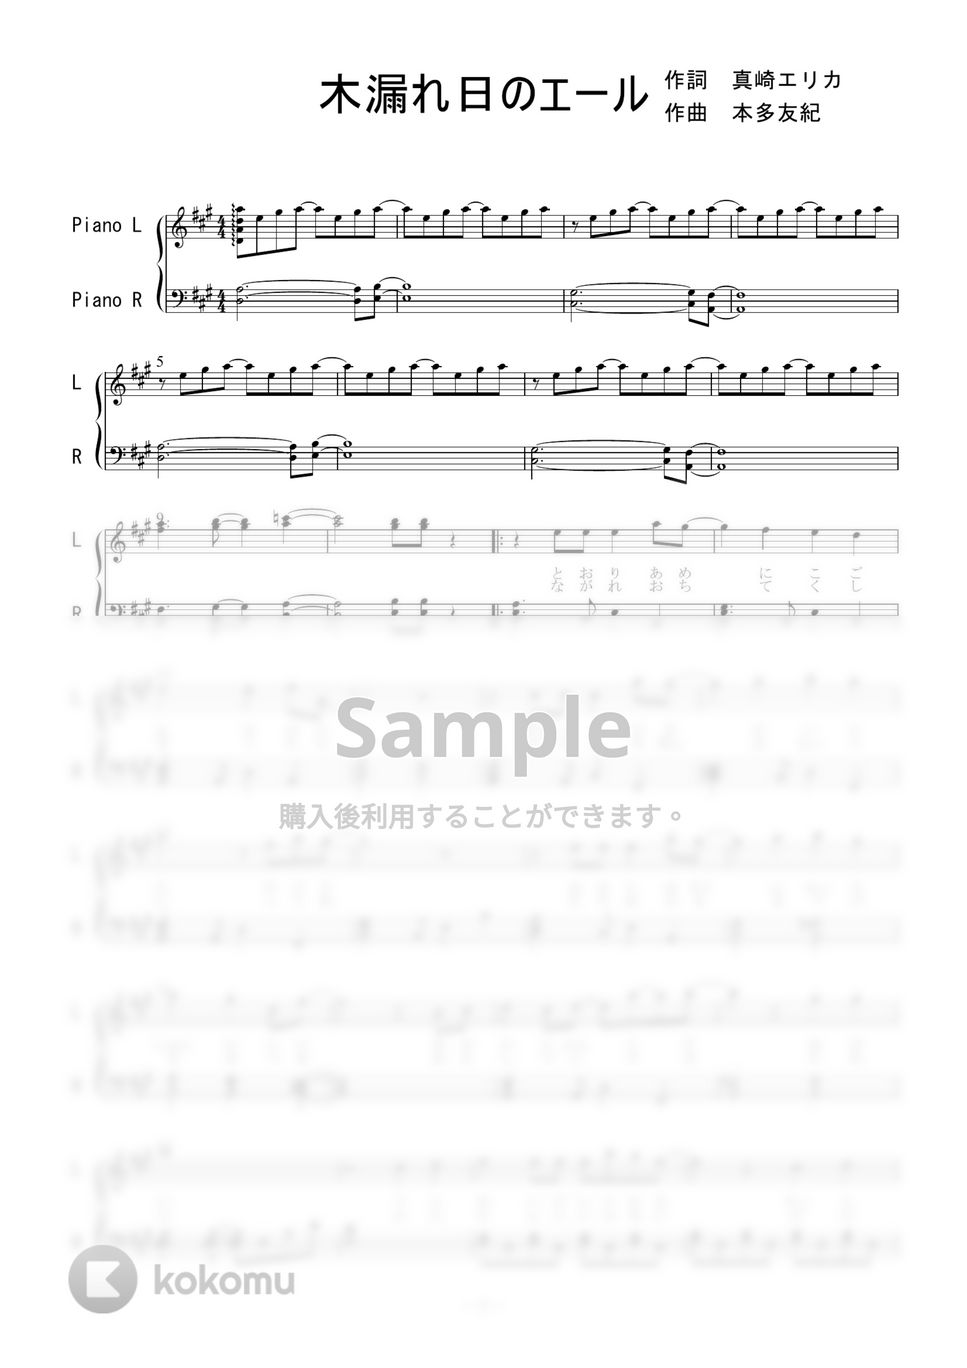 Machico - 木漏れ日のエール (ピアノソロ) by 二次元楽譜製作所